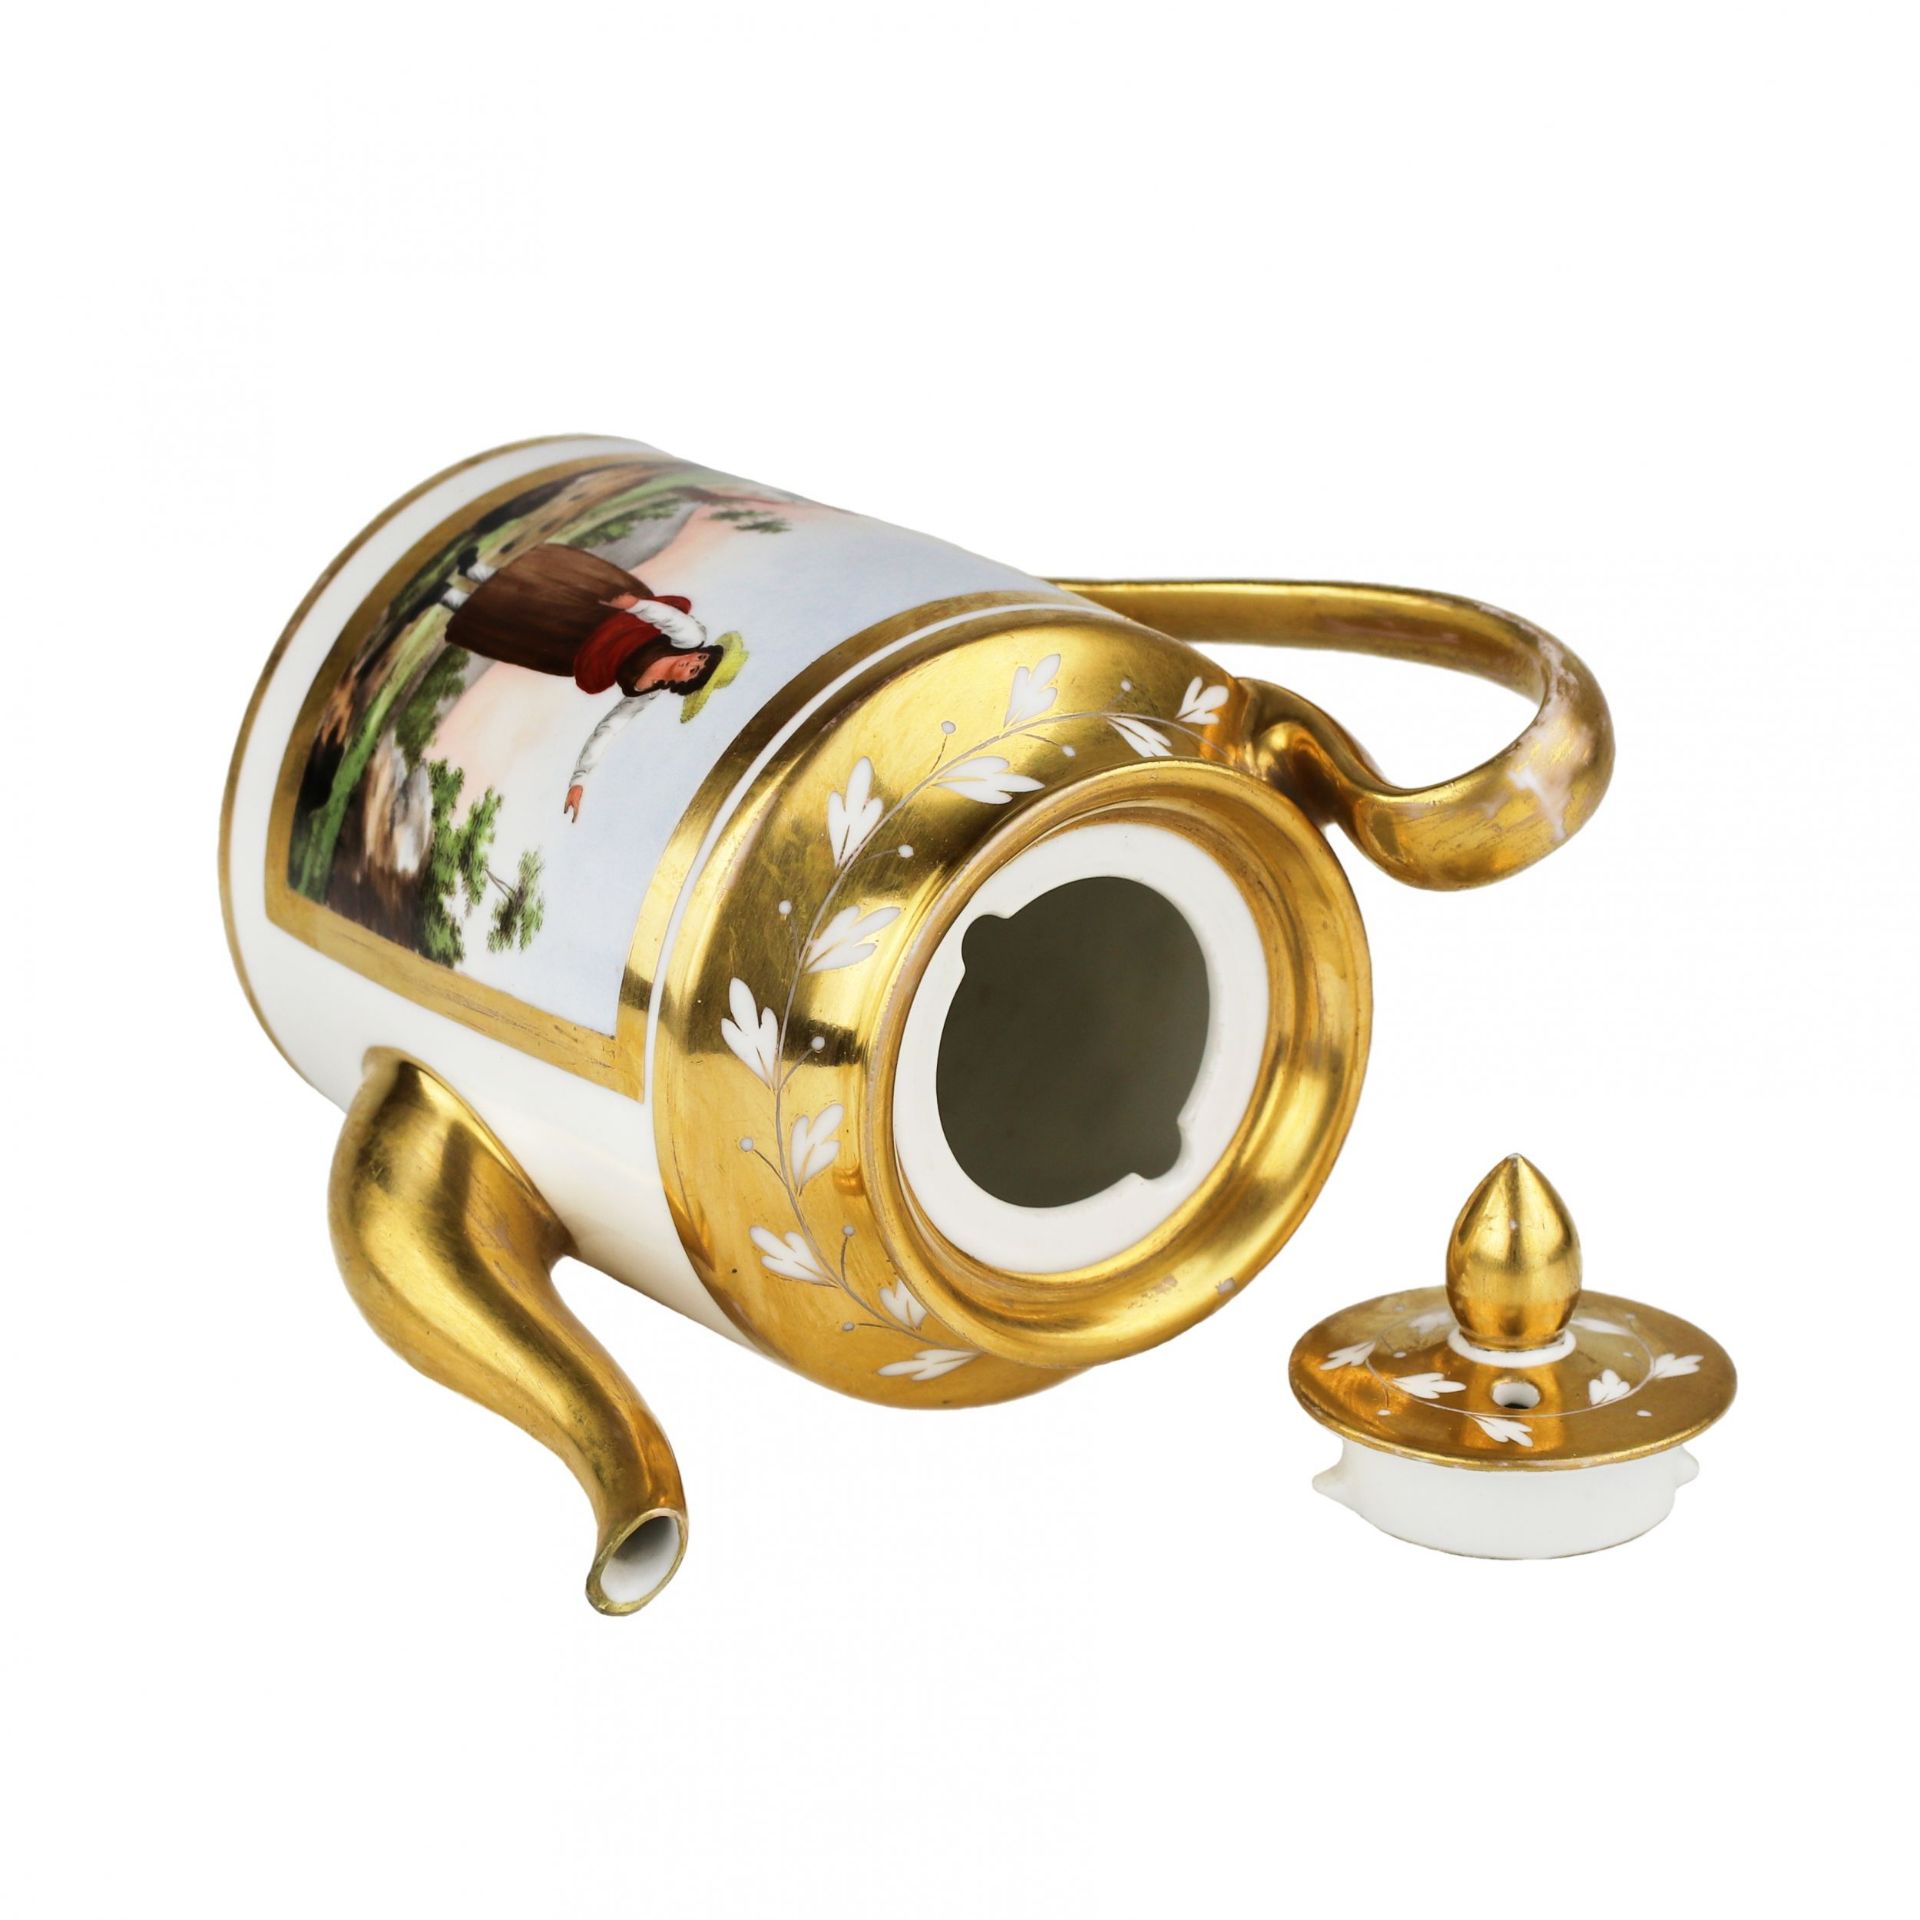 Gardner porcelain teapot. Russia, 1820-1830s - Image 6 of 7